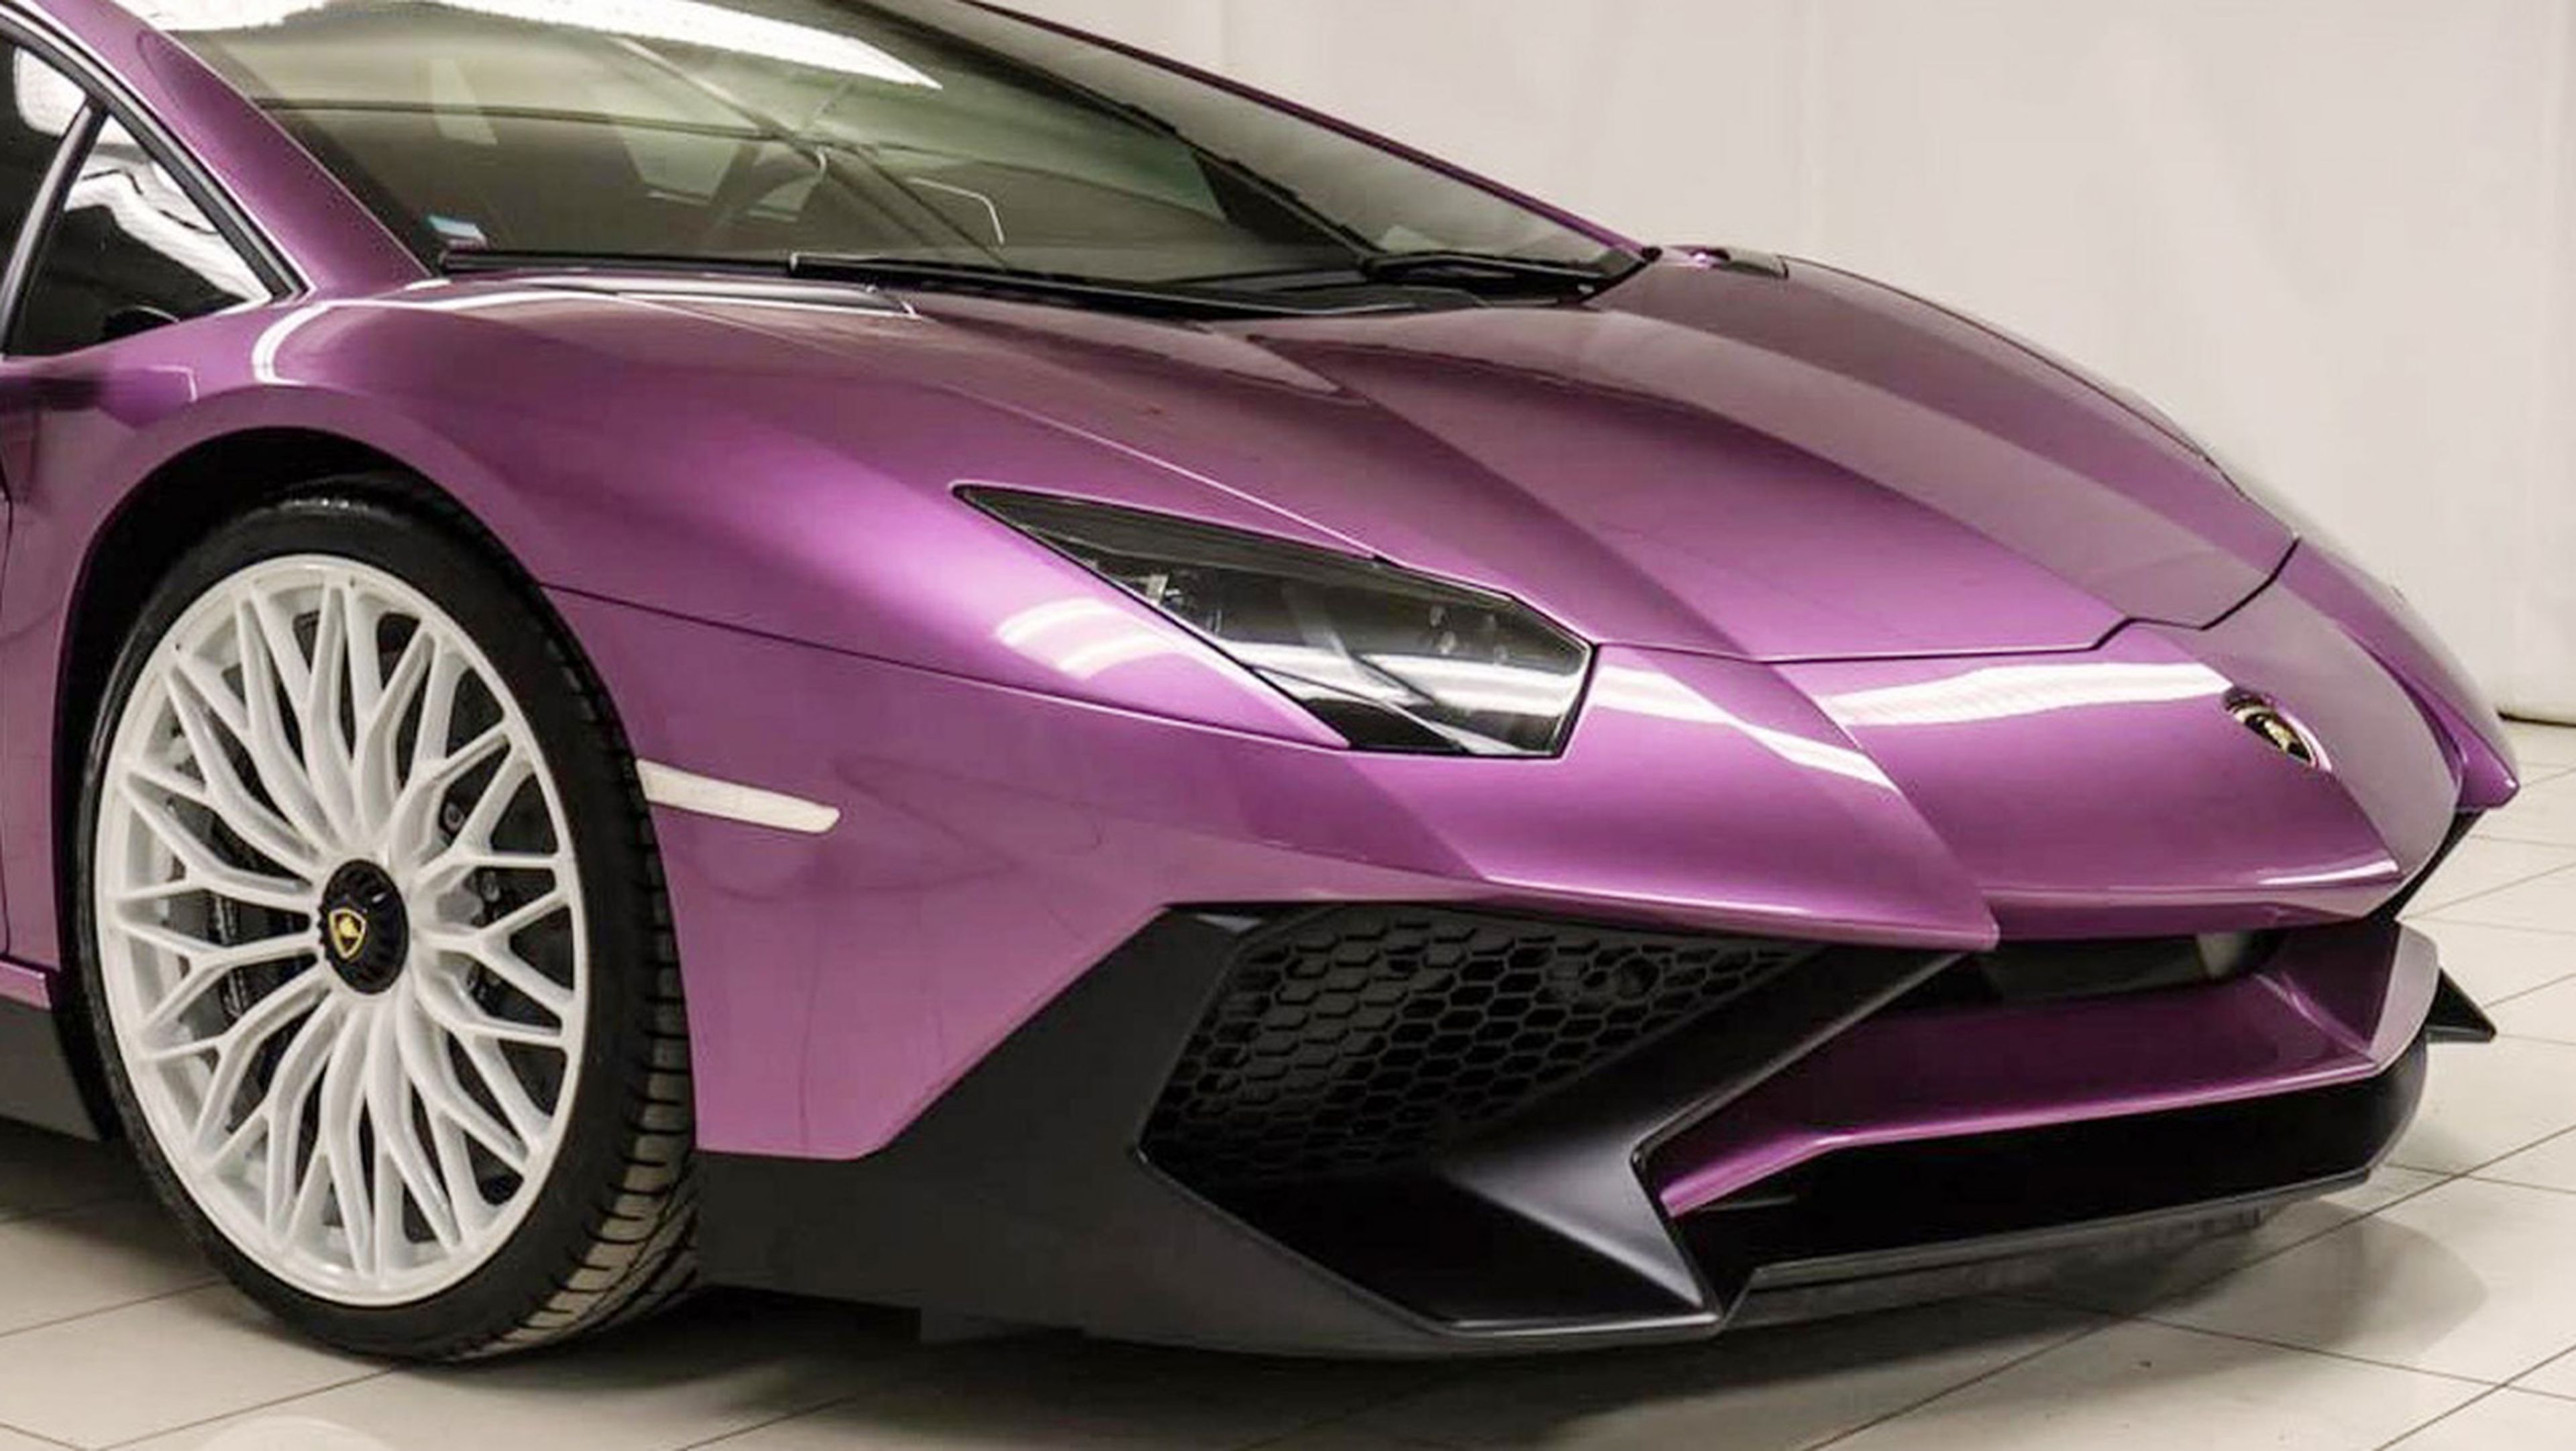 Lamborghini Aventador violeta